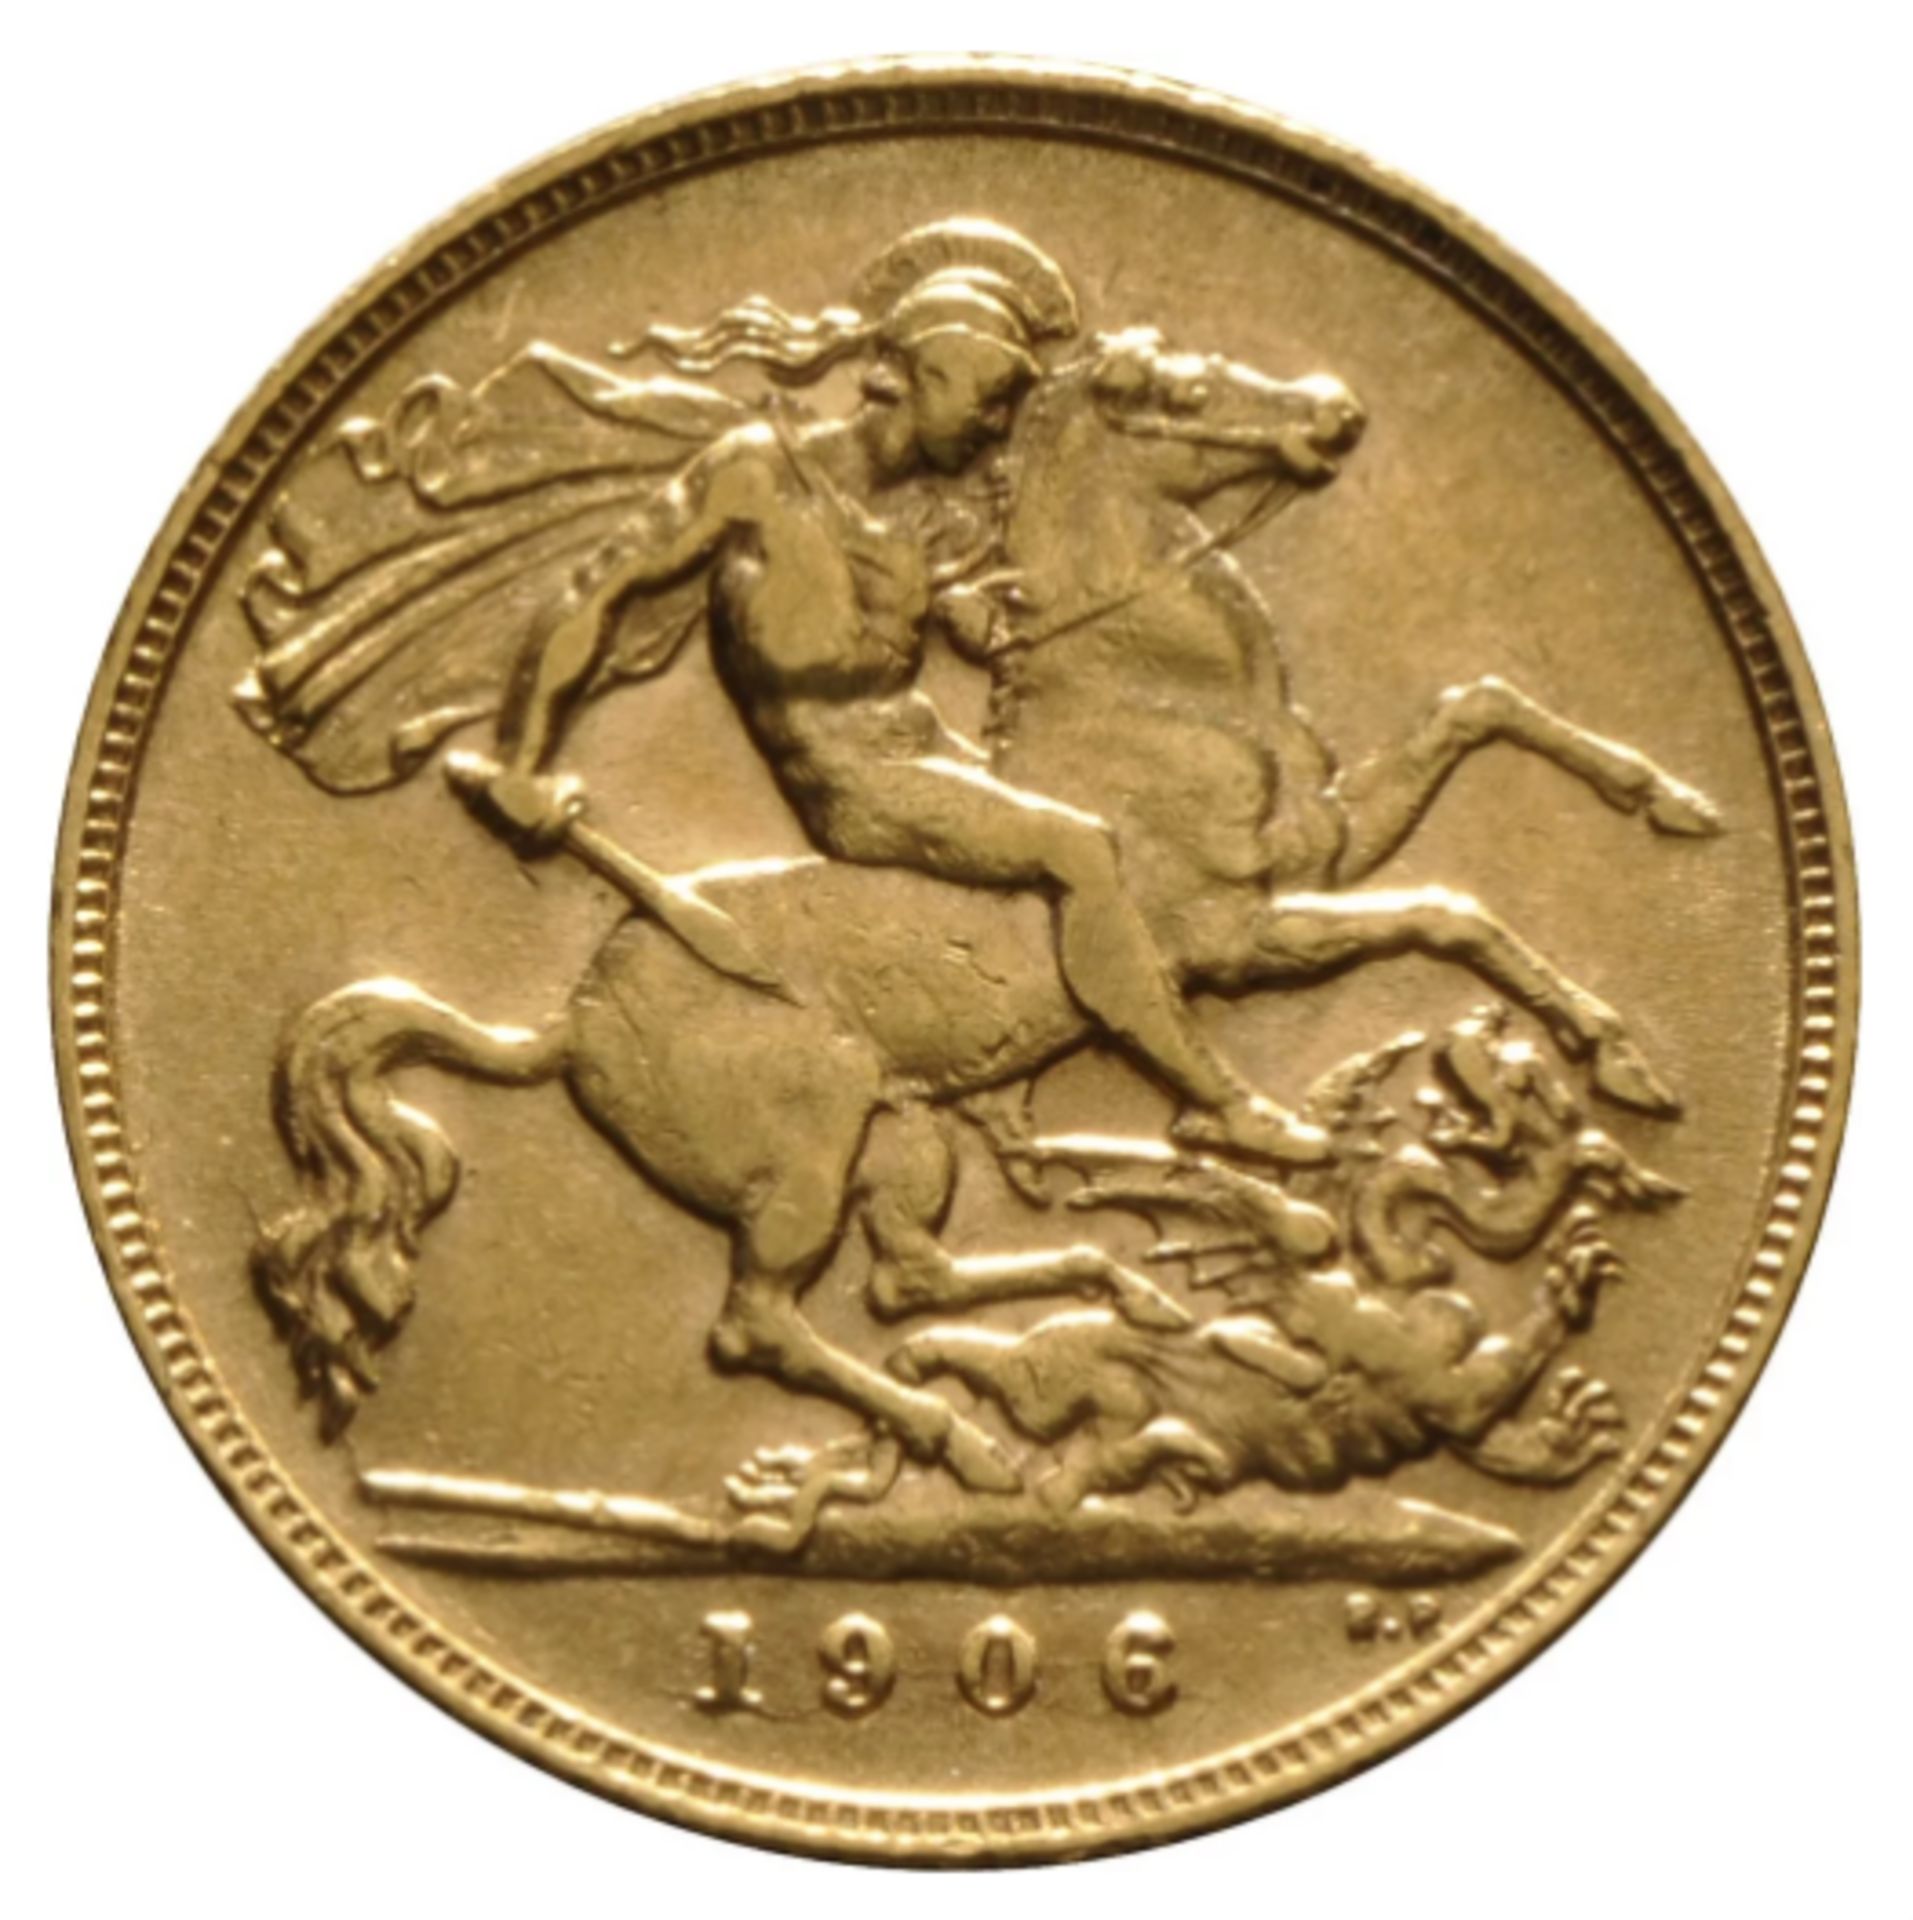 1906 - Half Sovereign - King Edward VII - London